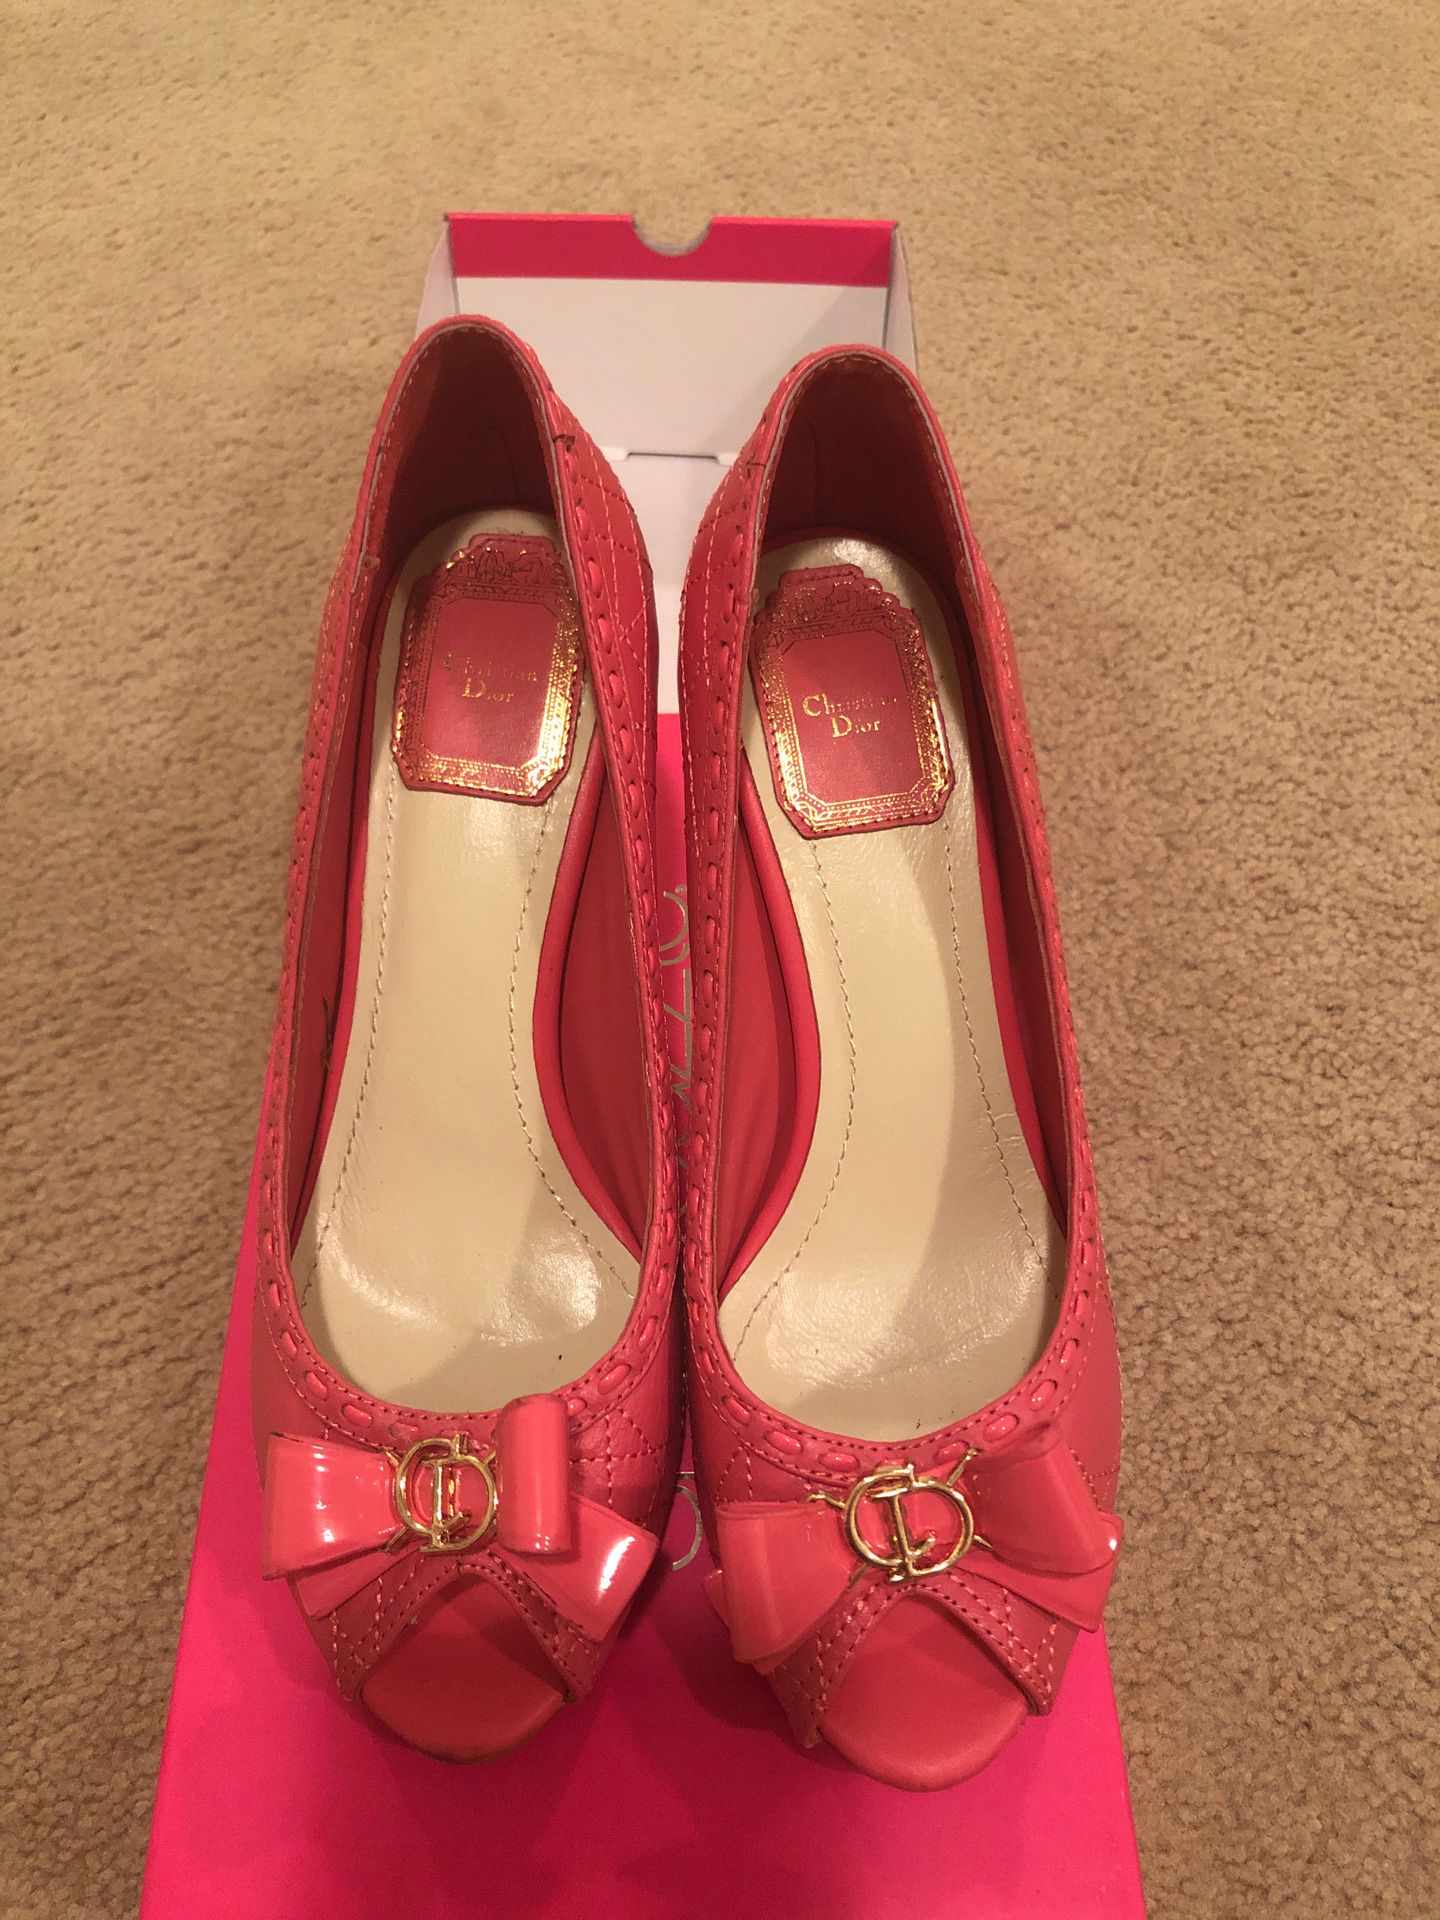 Dior high heels size 7